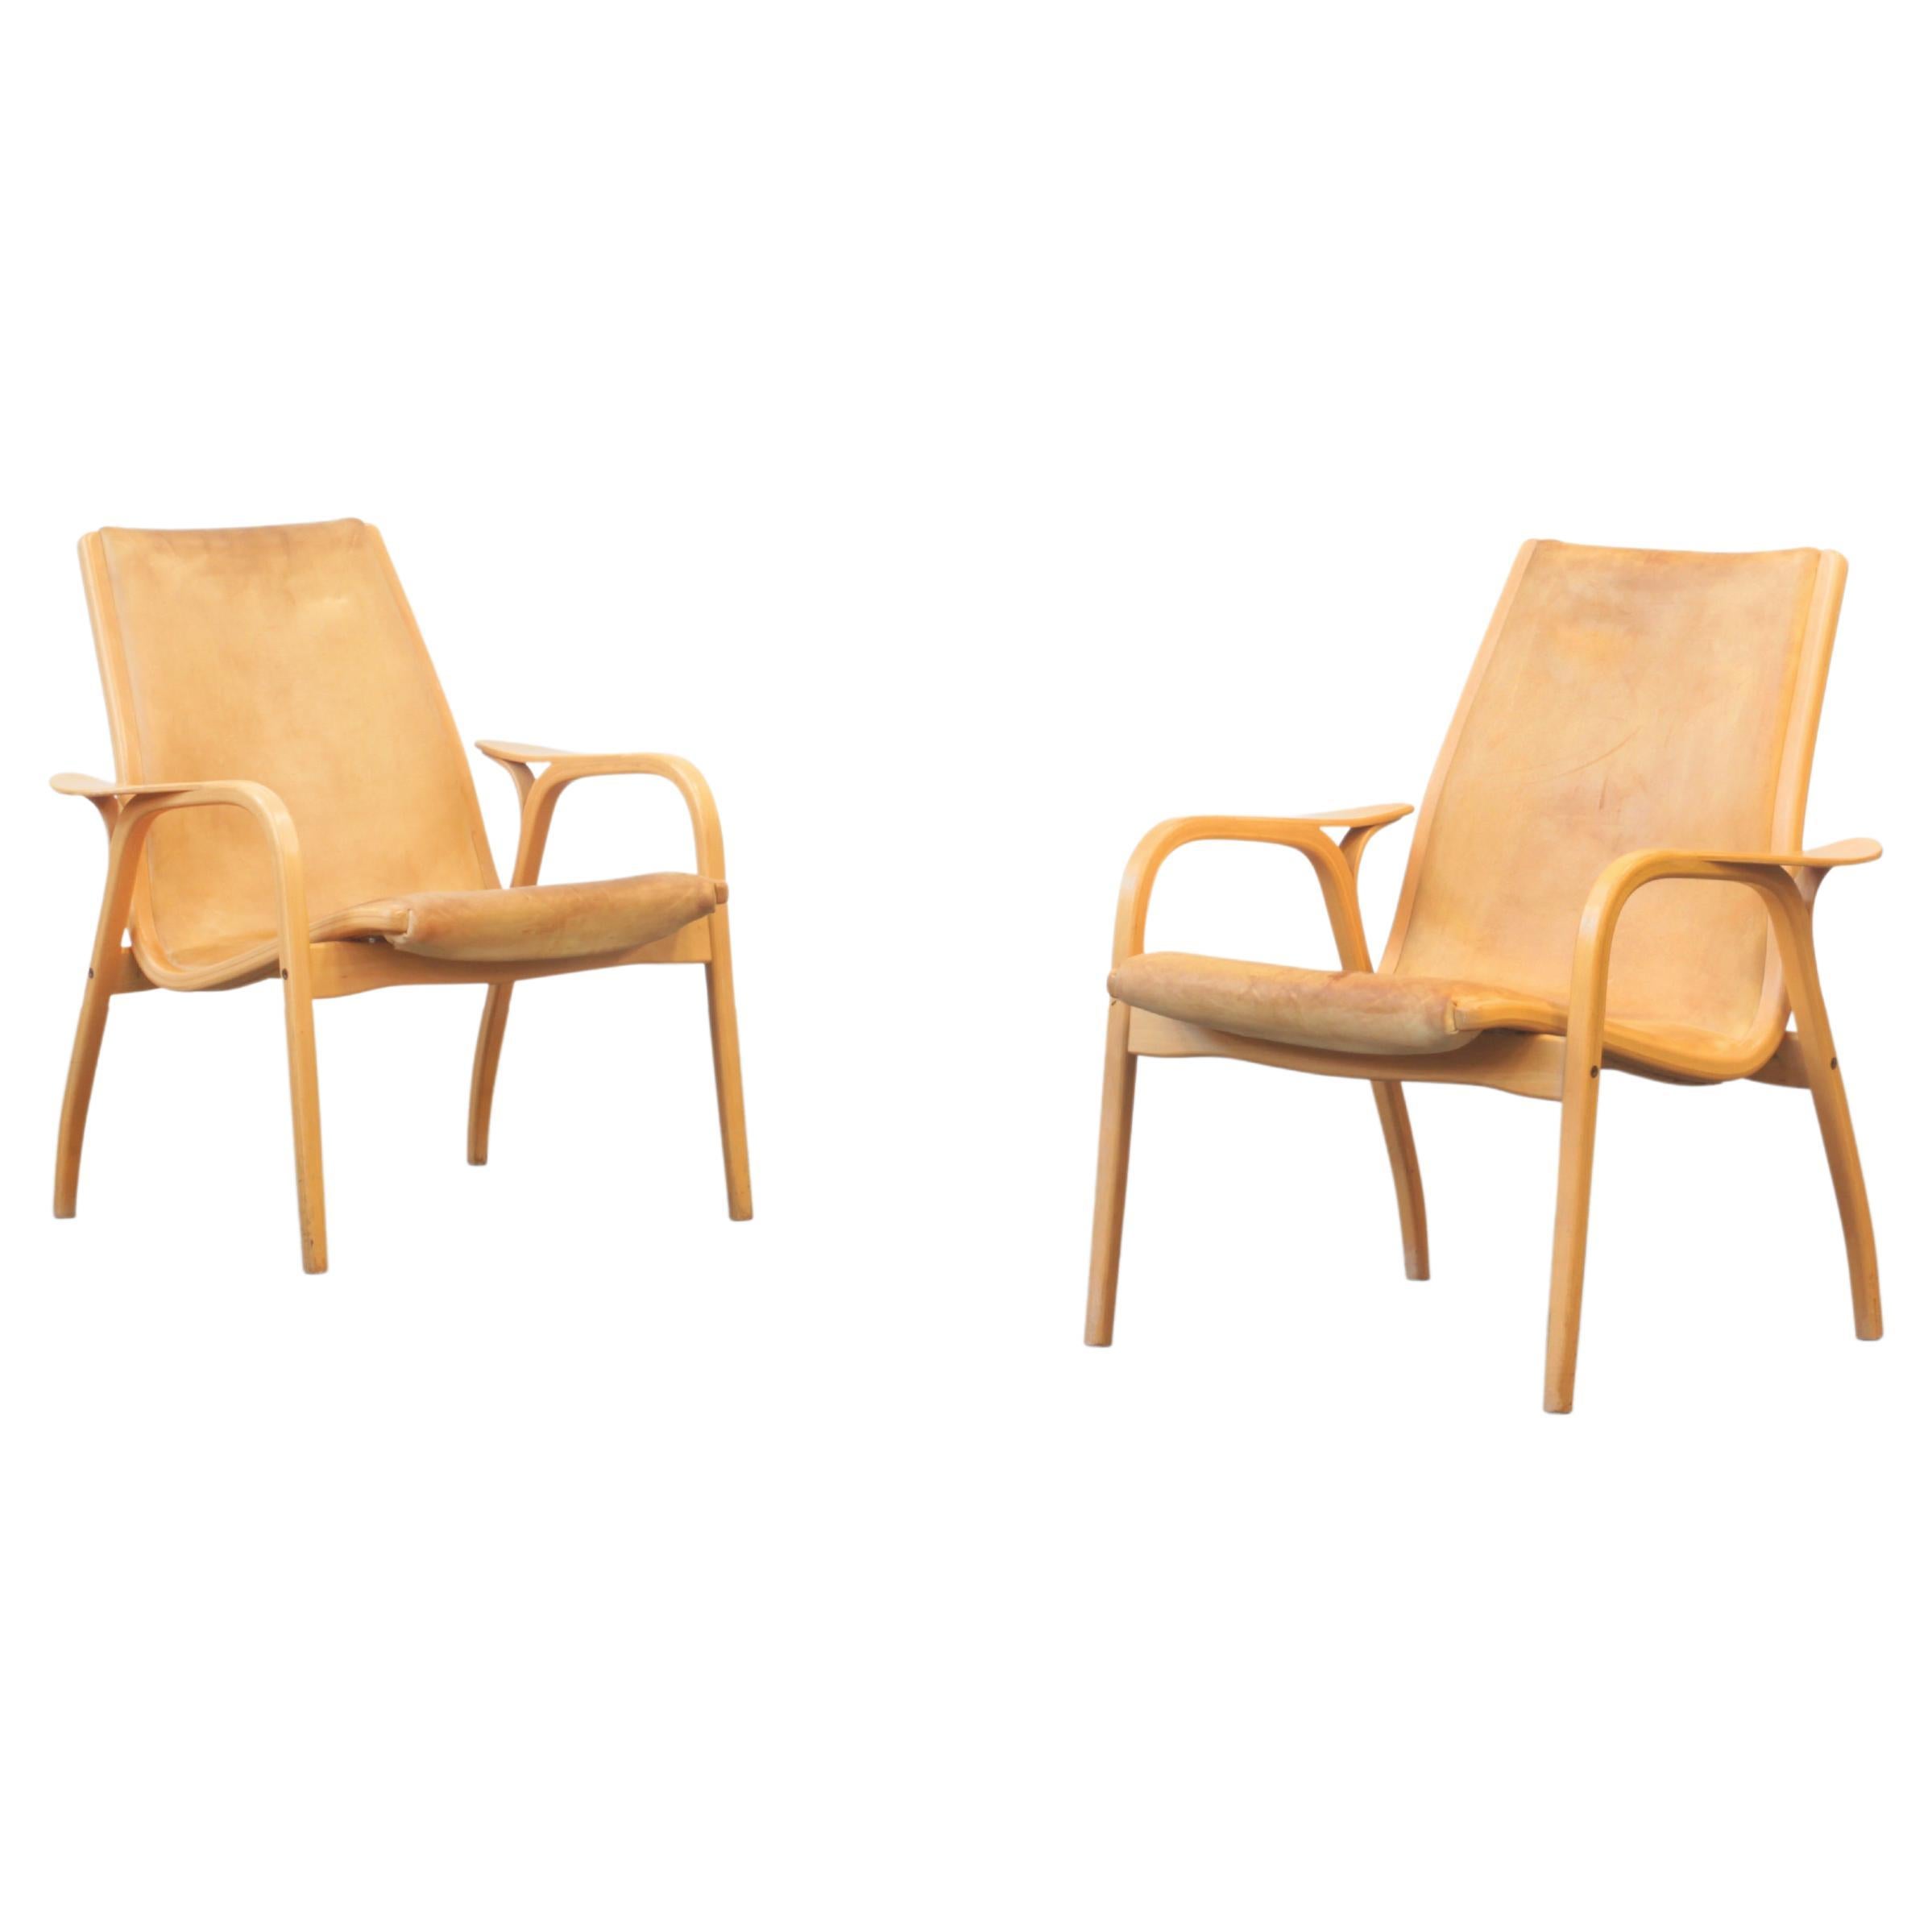 Pair of Yngve Ekstrøm Lounge Easy Chairs by Swedese Møbler, Sweden 1956